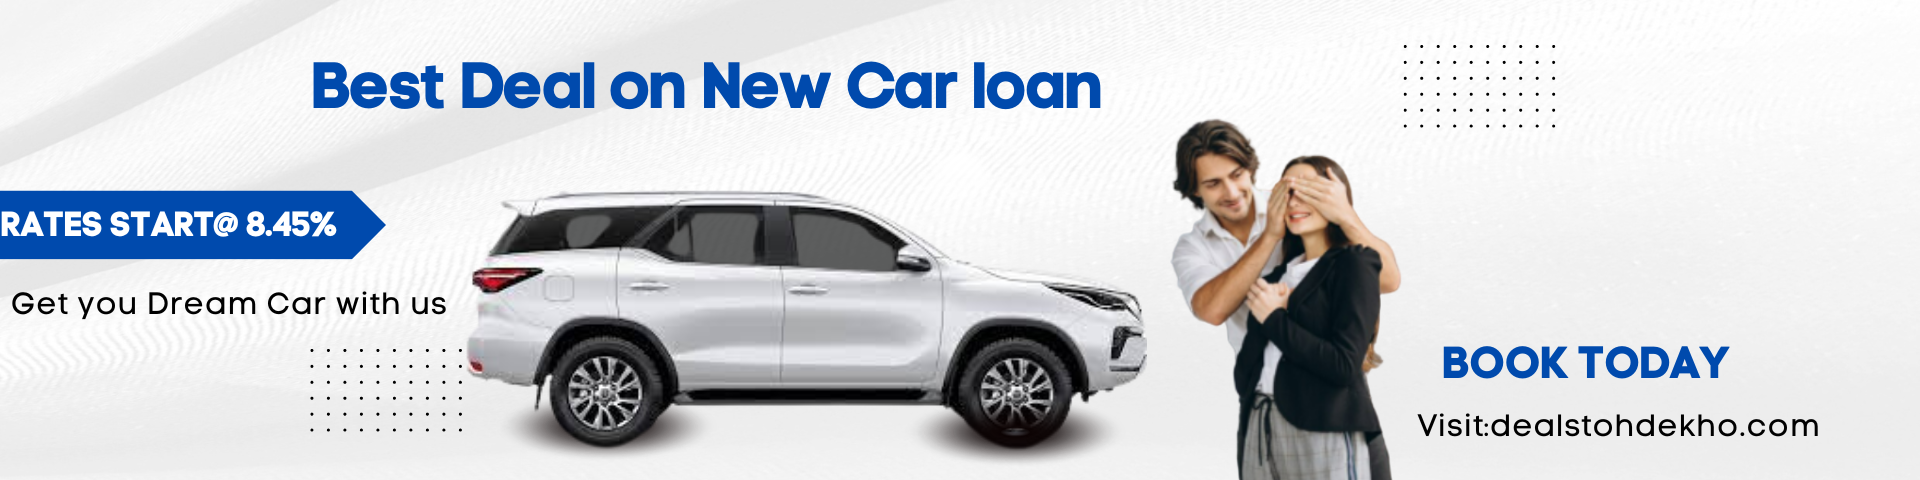 apply new car loan @8.45%